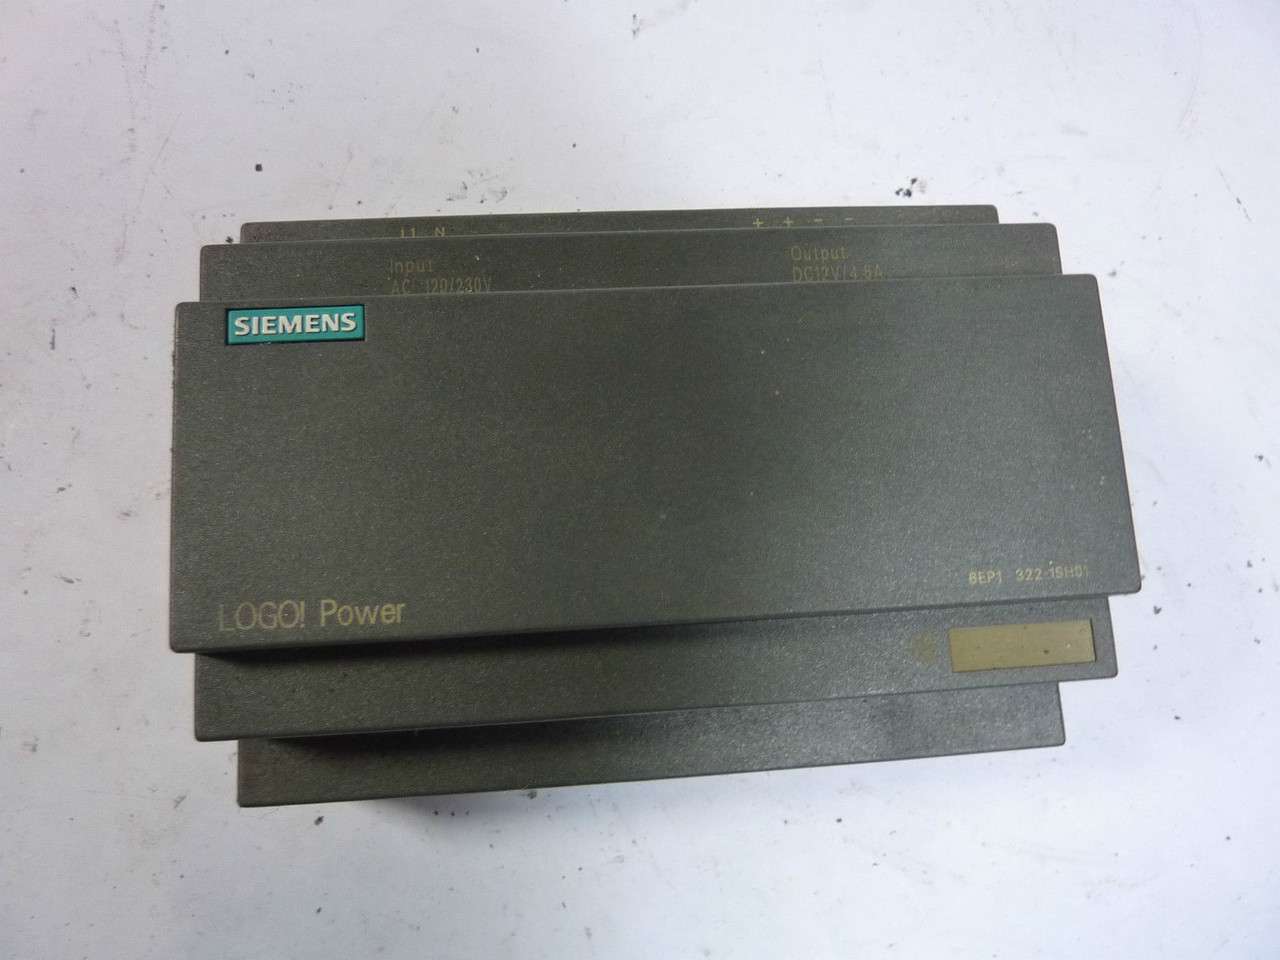 Siemens 6EP1322-1SH01 Power Supply 12VDC 120/230V USED